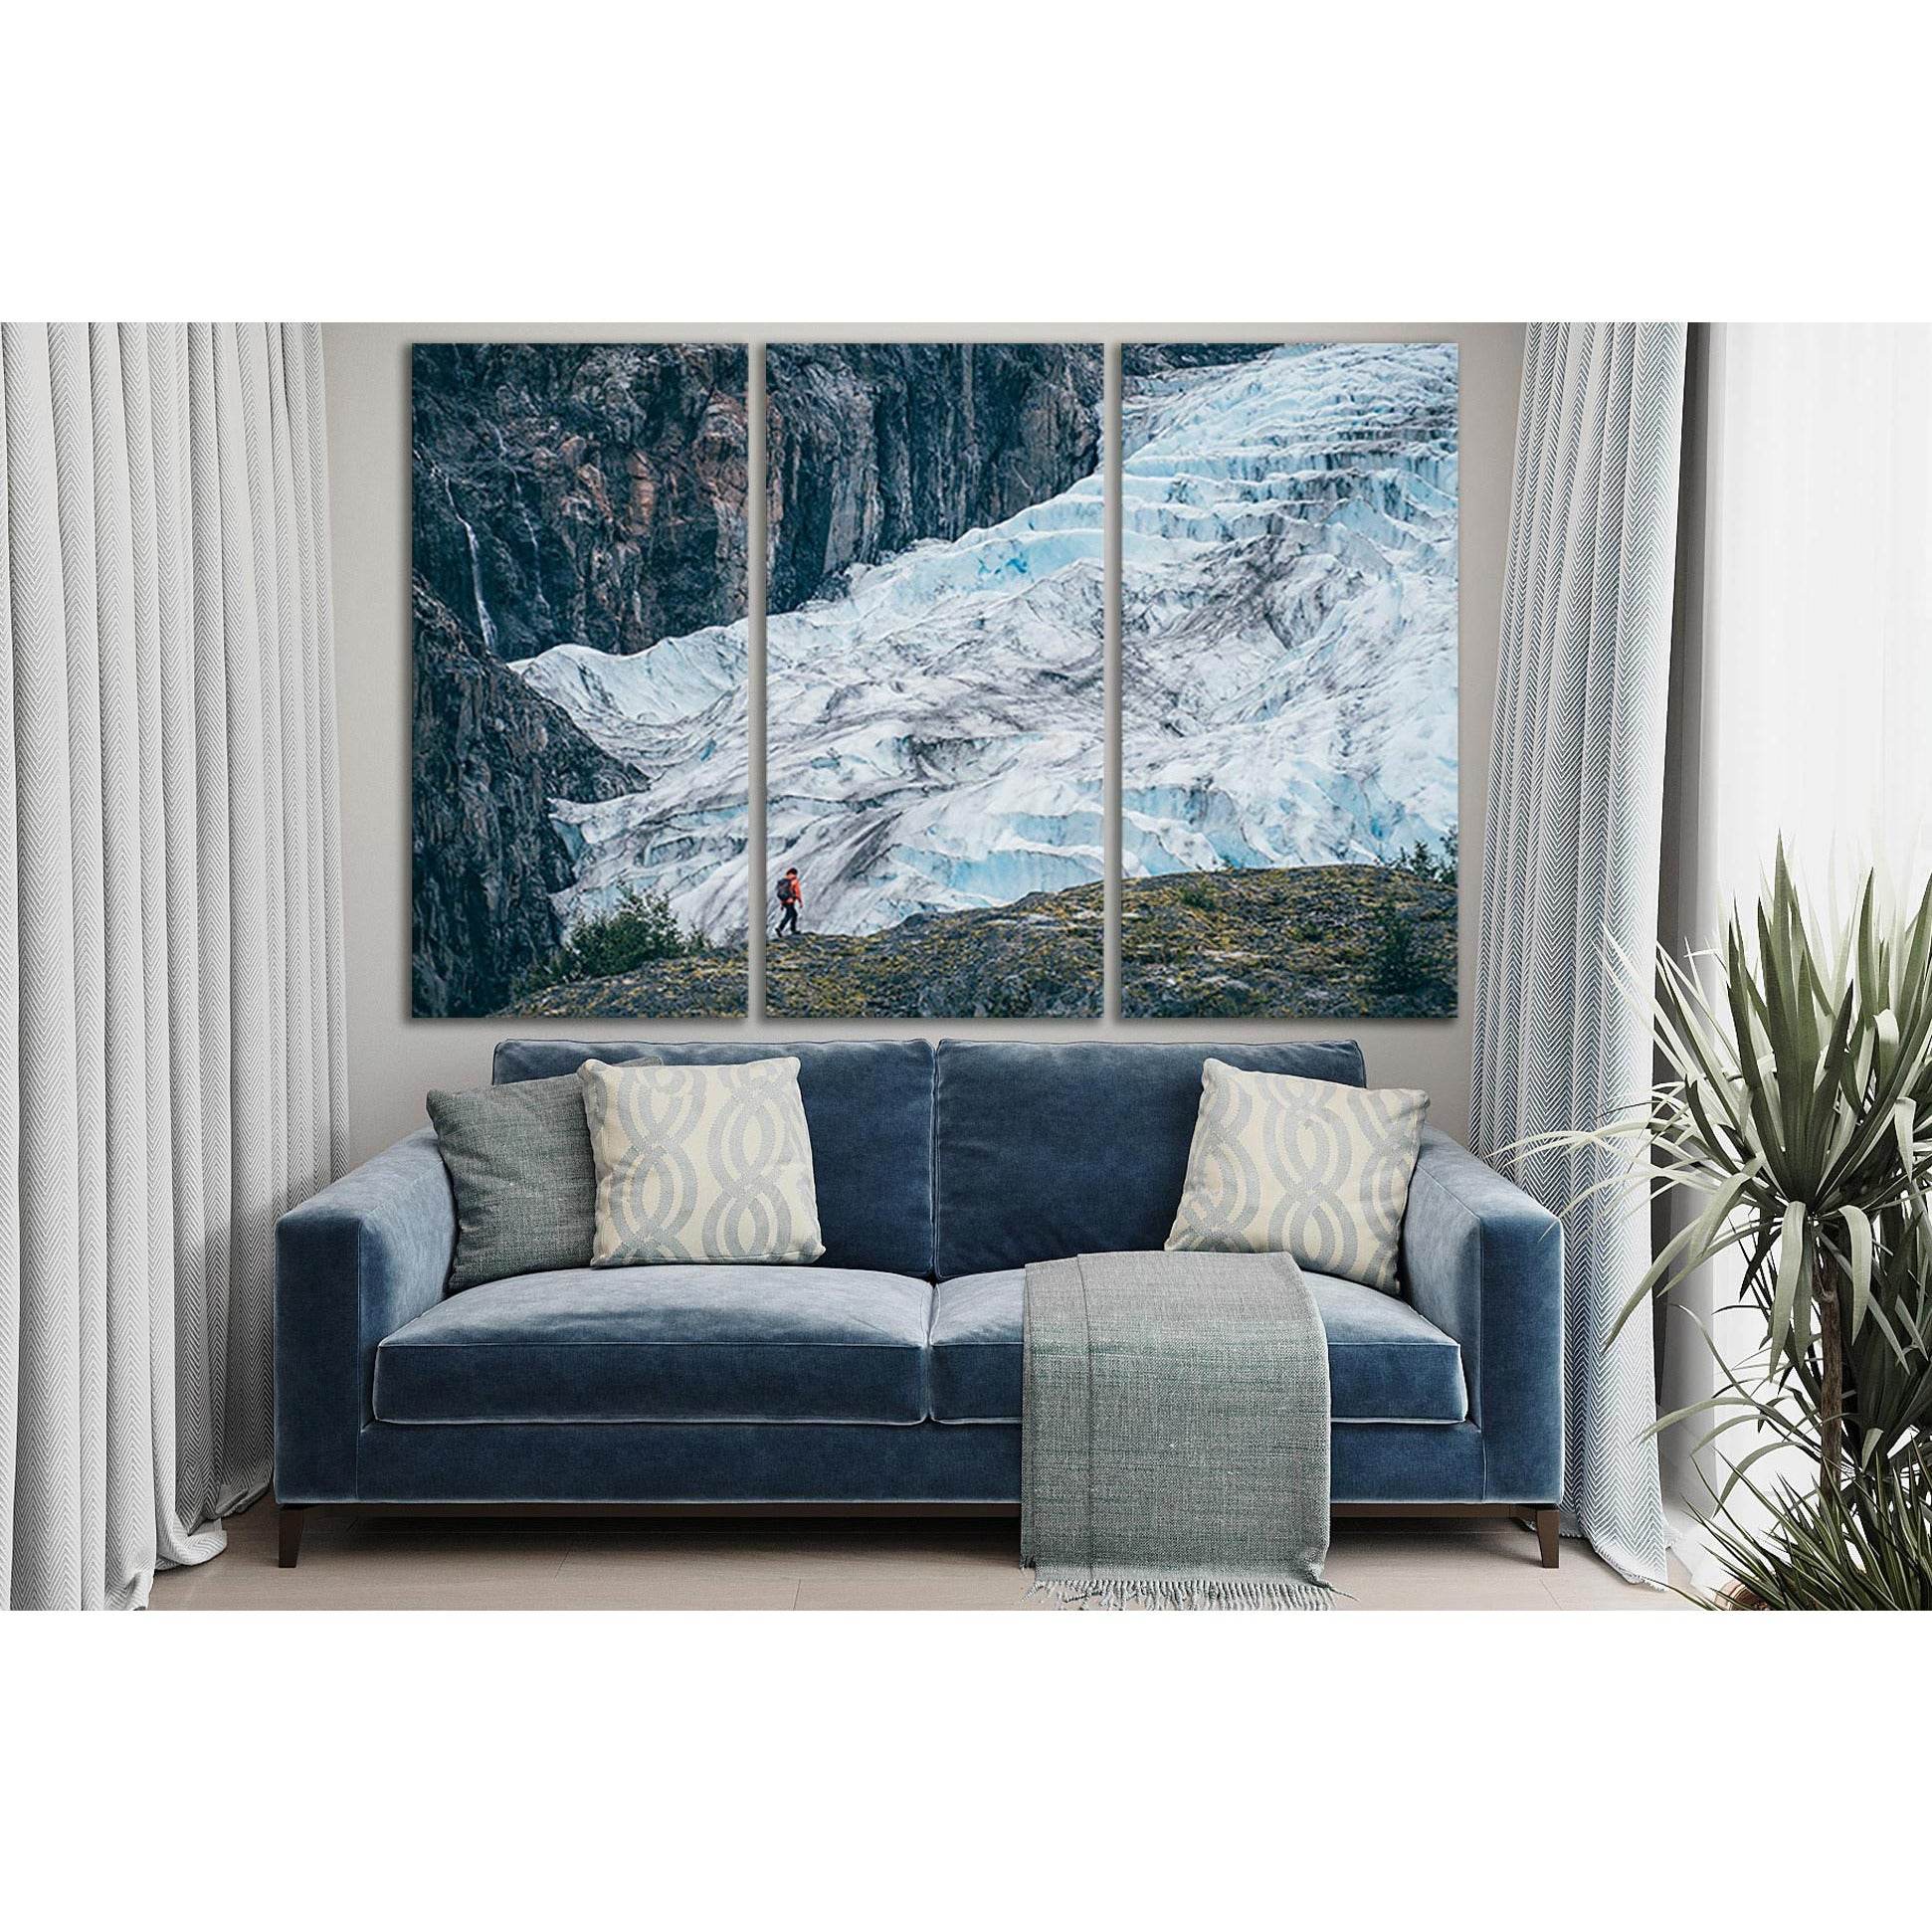 Exit Glacier Seward Alaska №SL1348 Ready to Hang Canvas Print